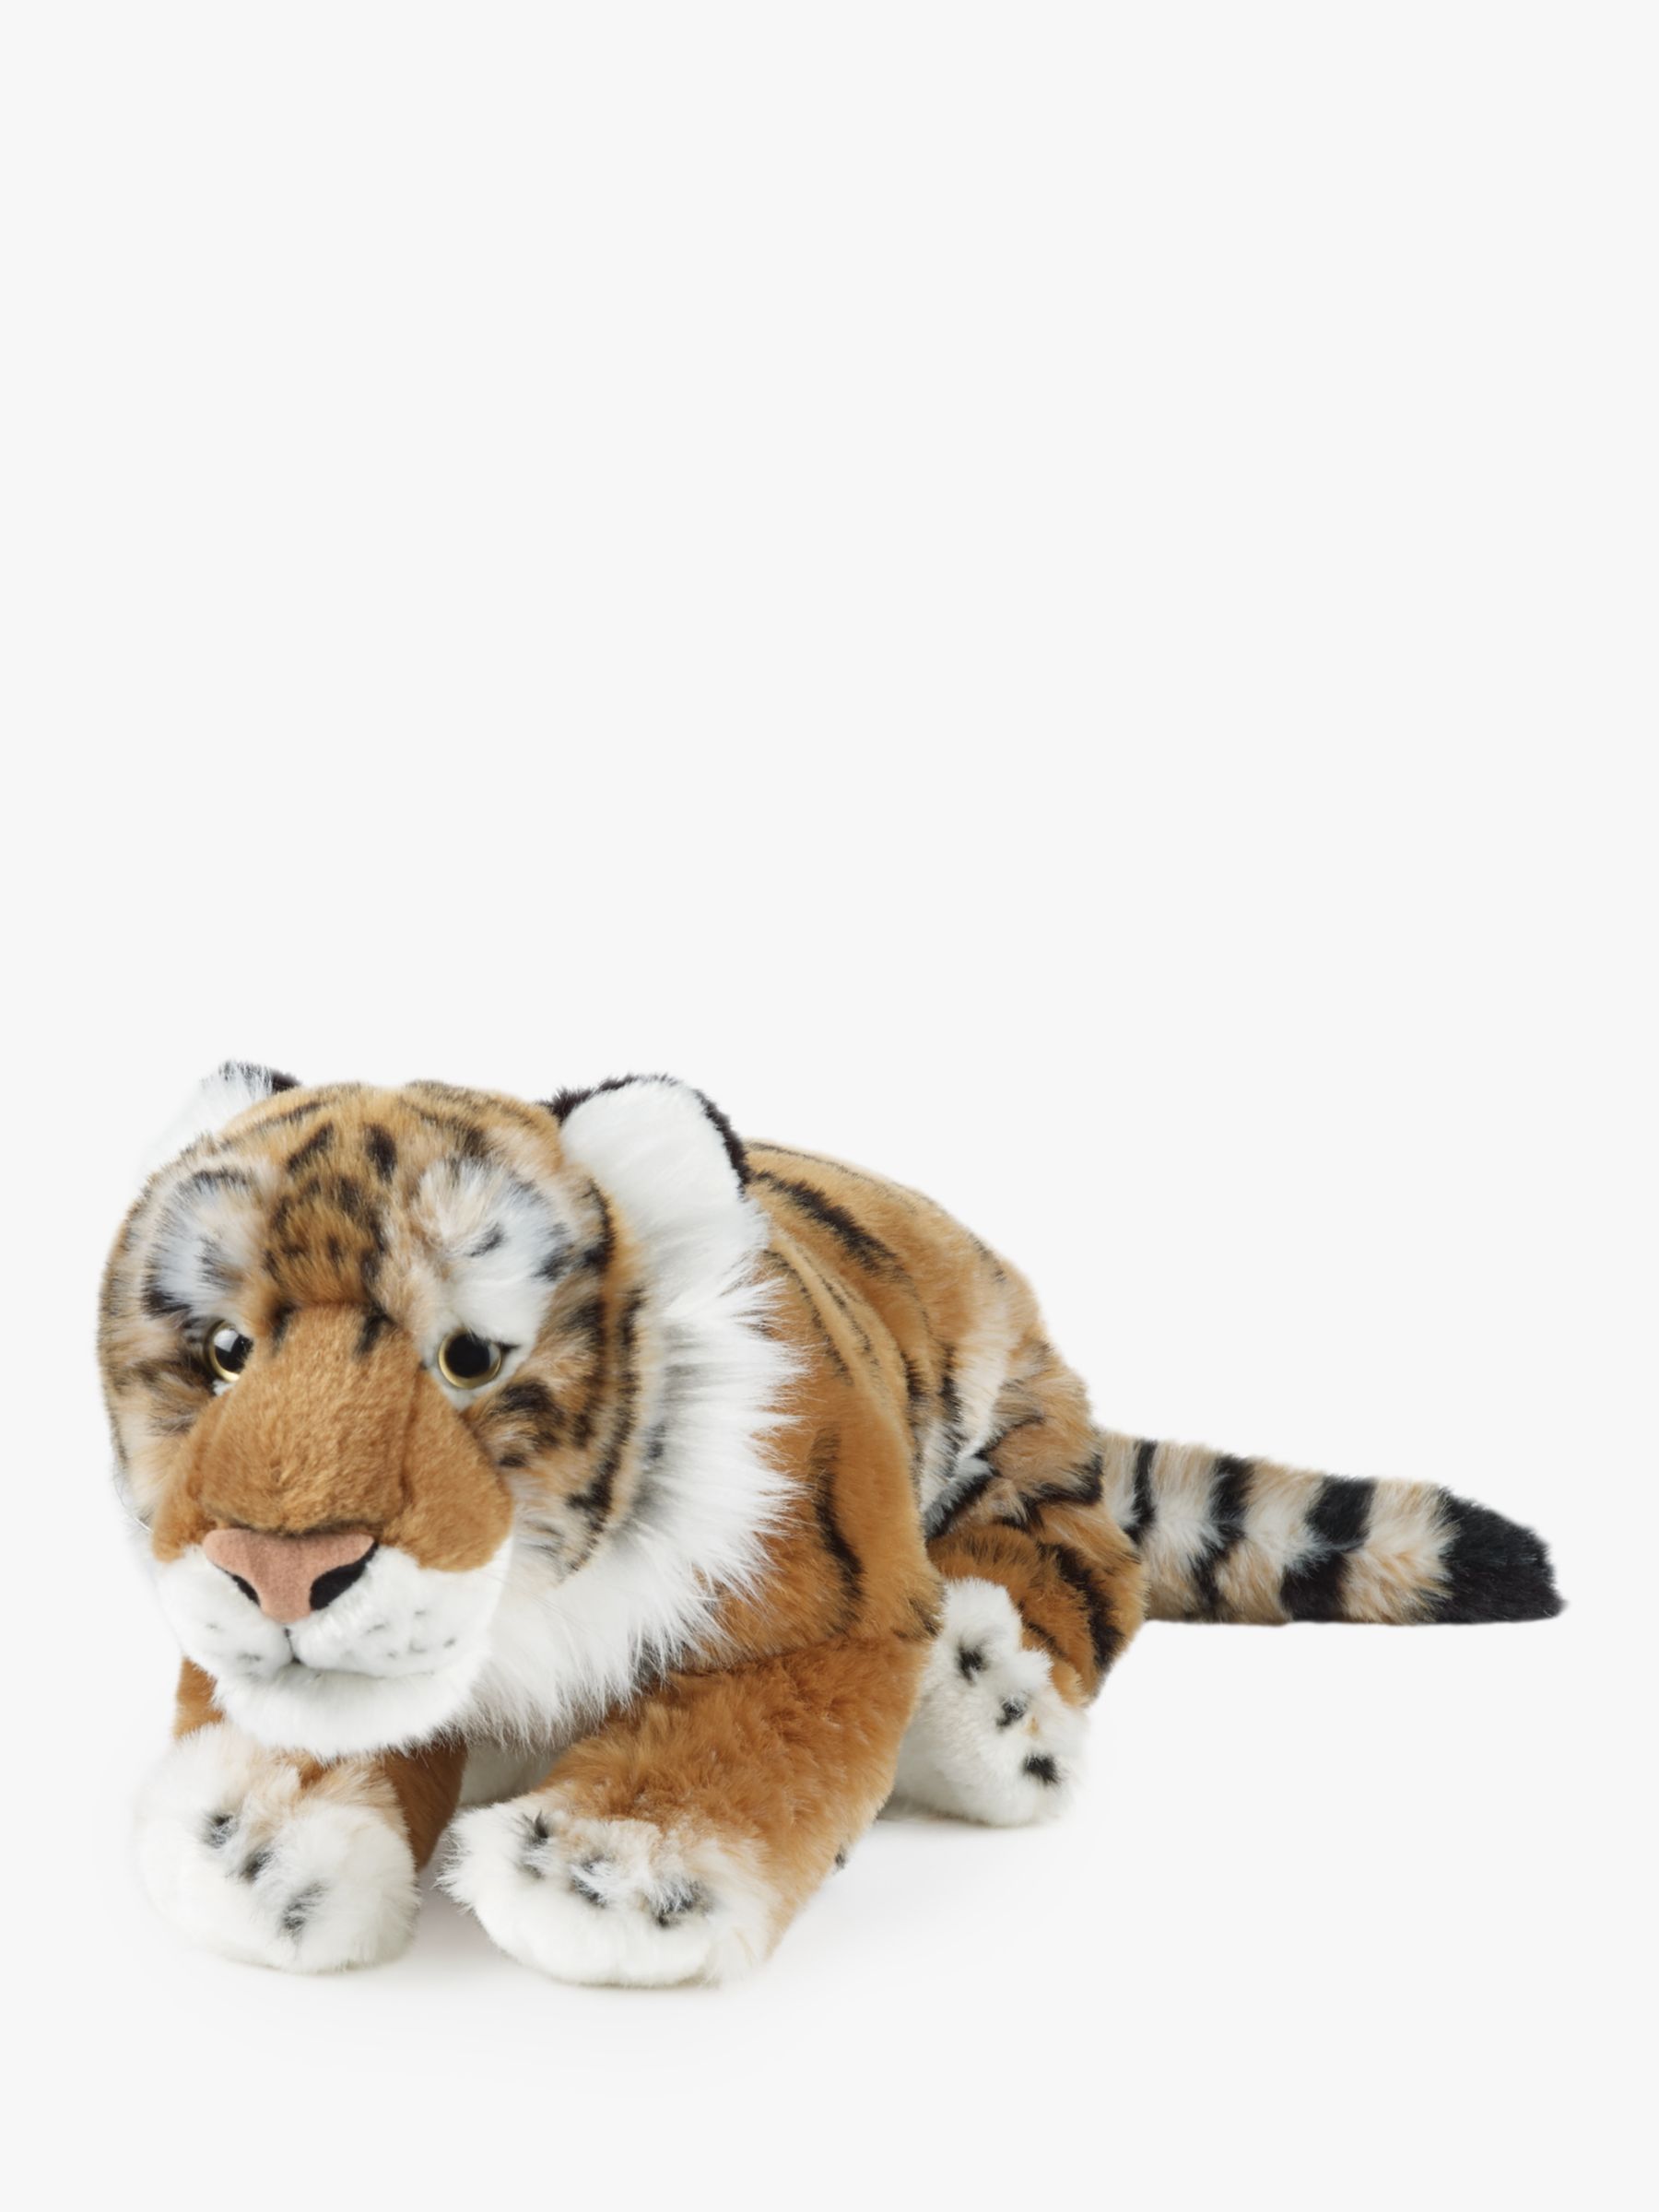 large toy tiger